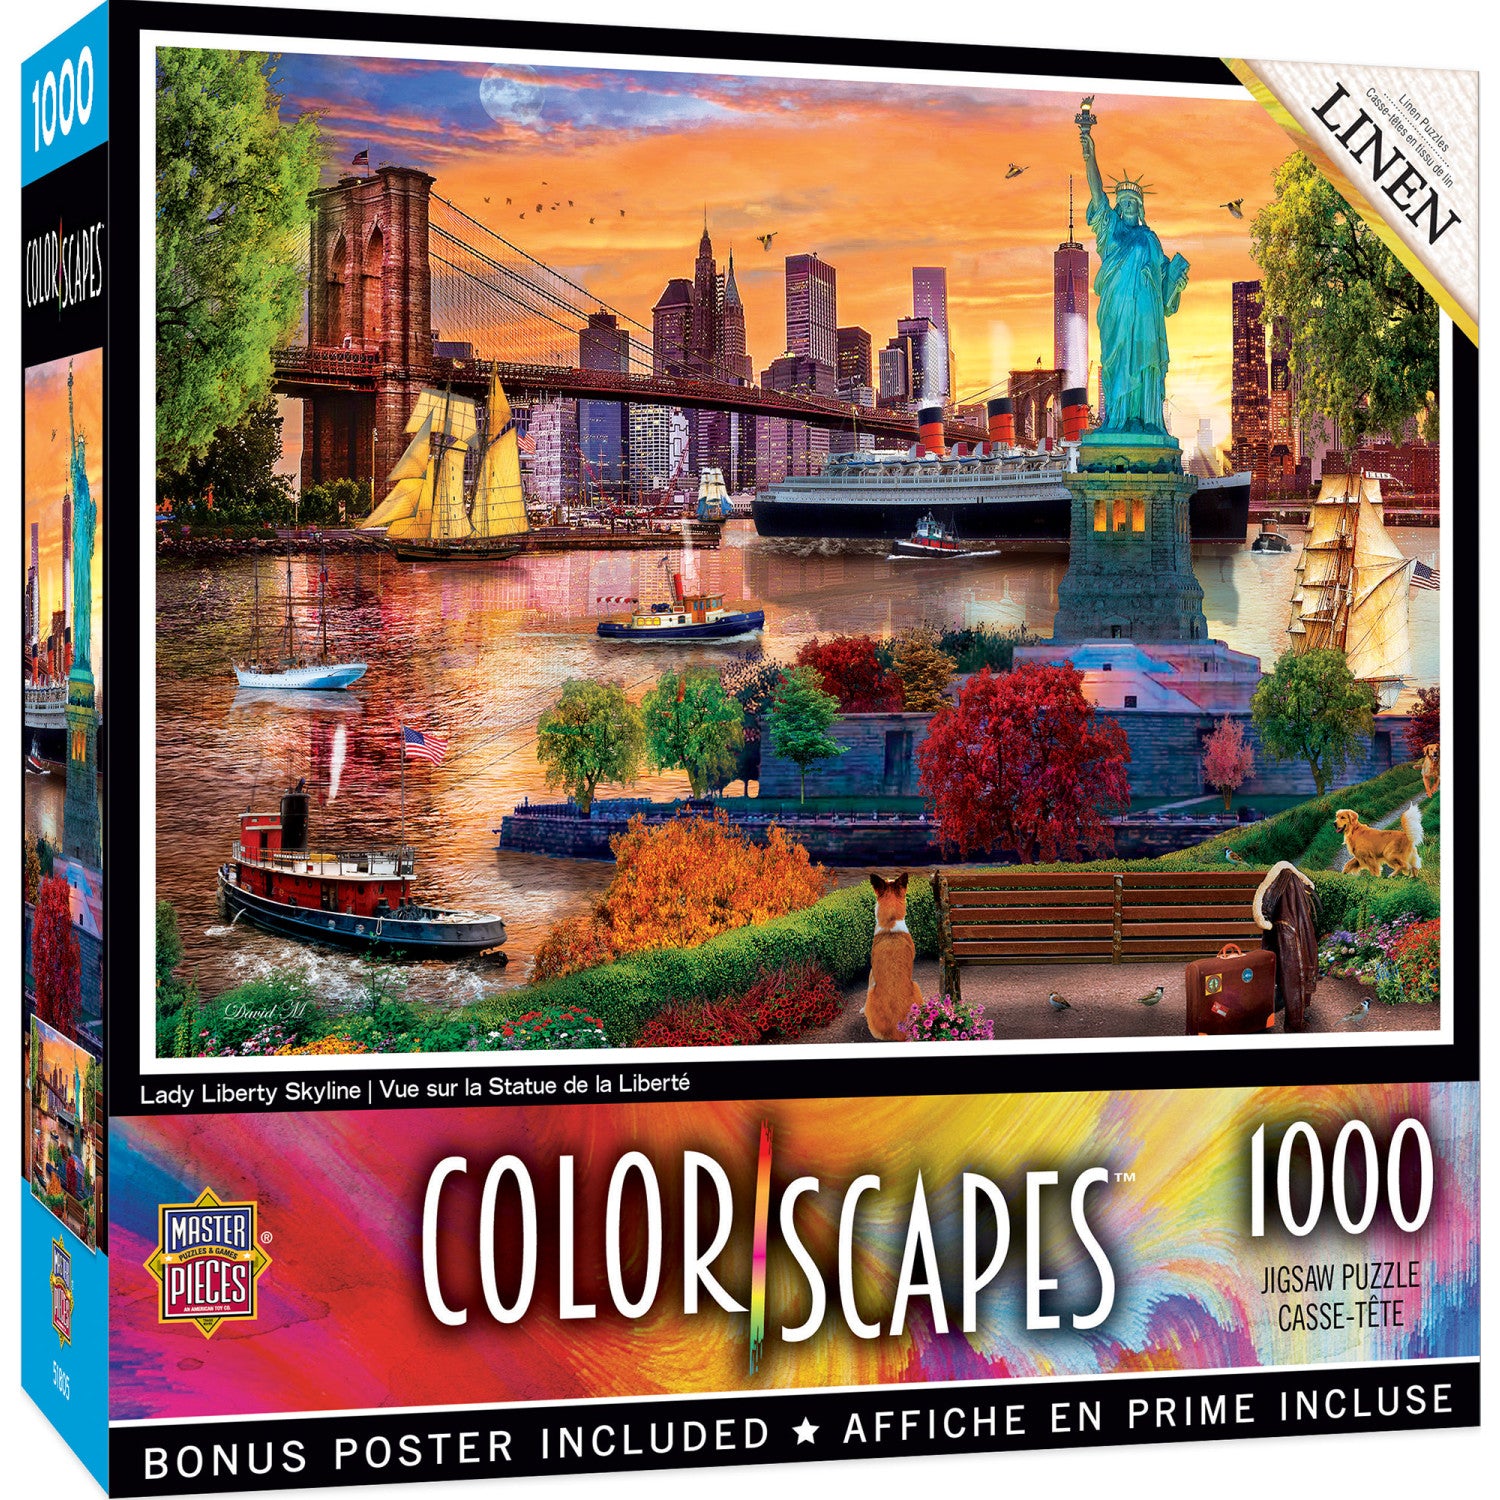 Colorscapes - Lady Liberty Skyline 1000 Piece Jigsaw Puzzle